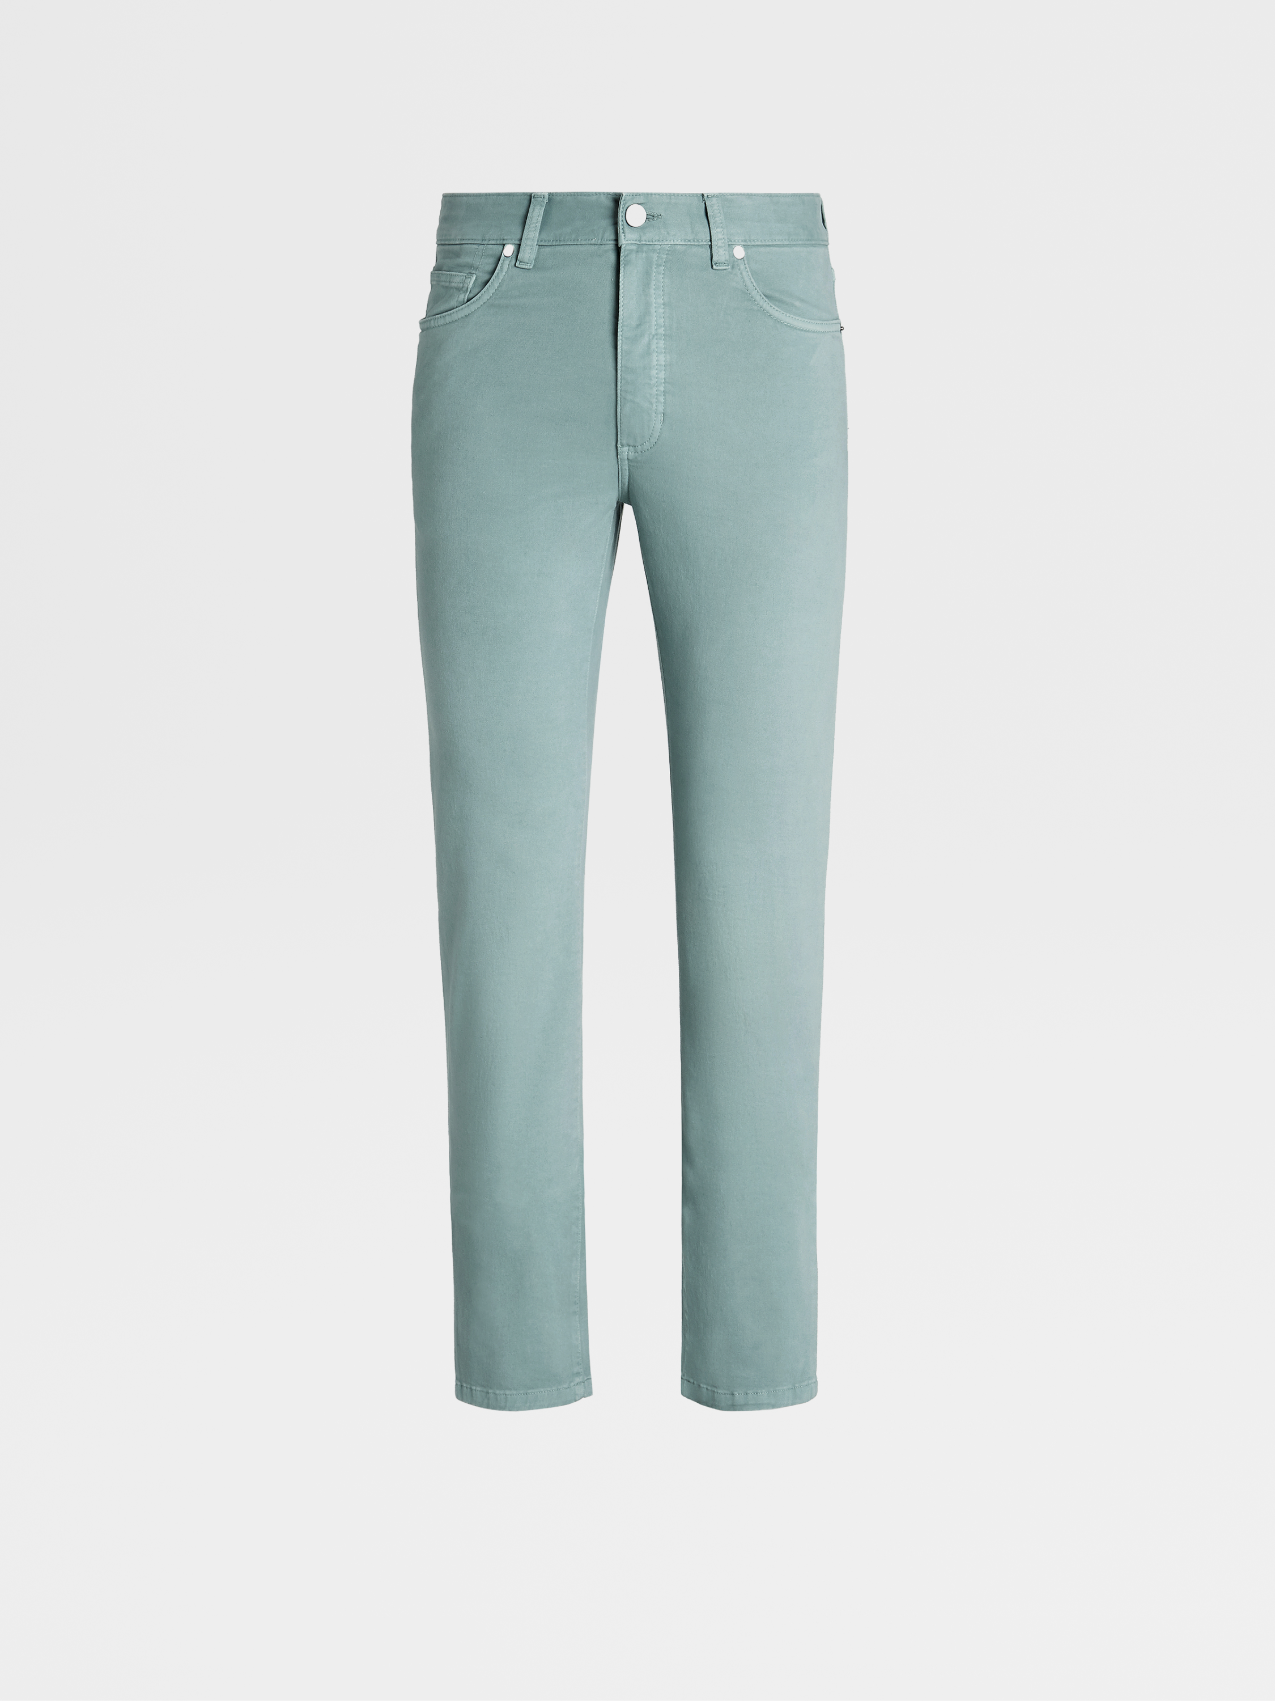 Aqua Green Stretch Cotton Gabardine 5-Pocket Jeans